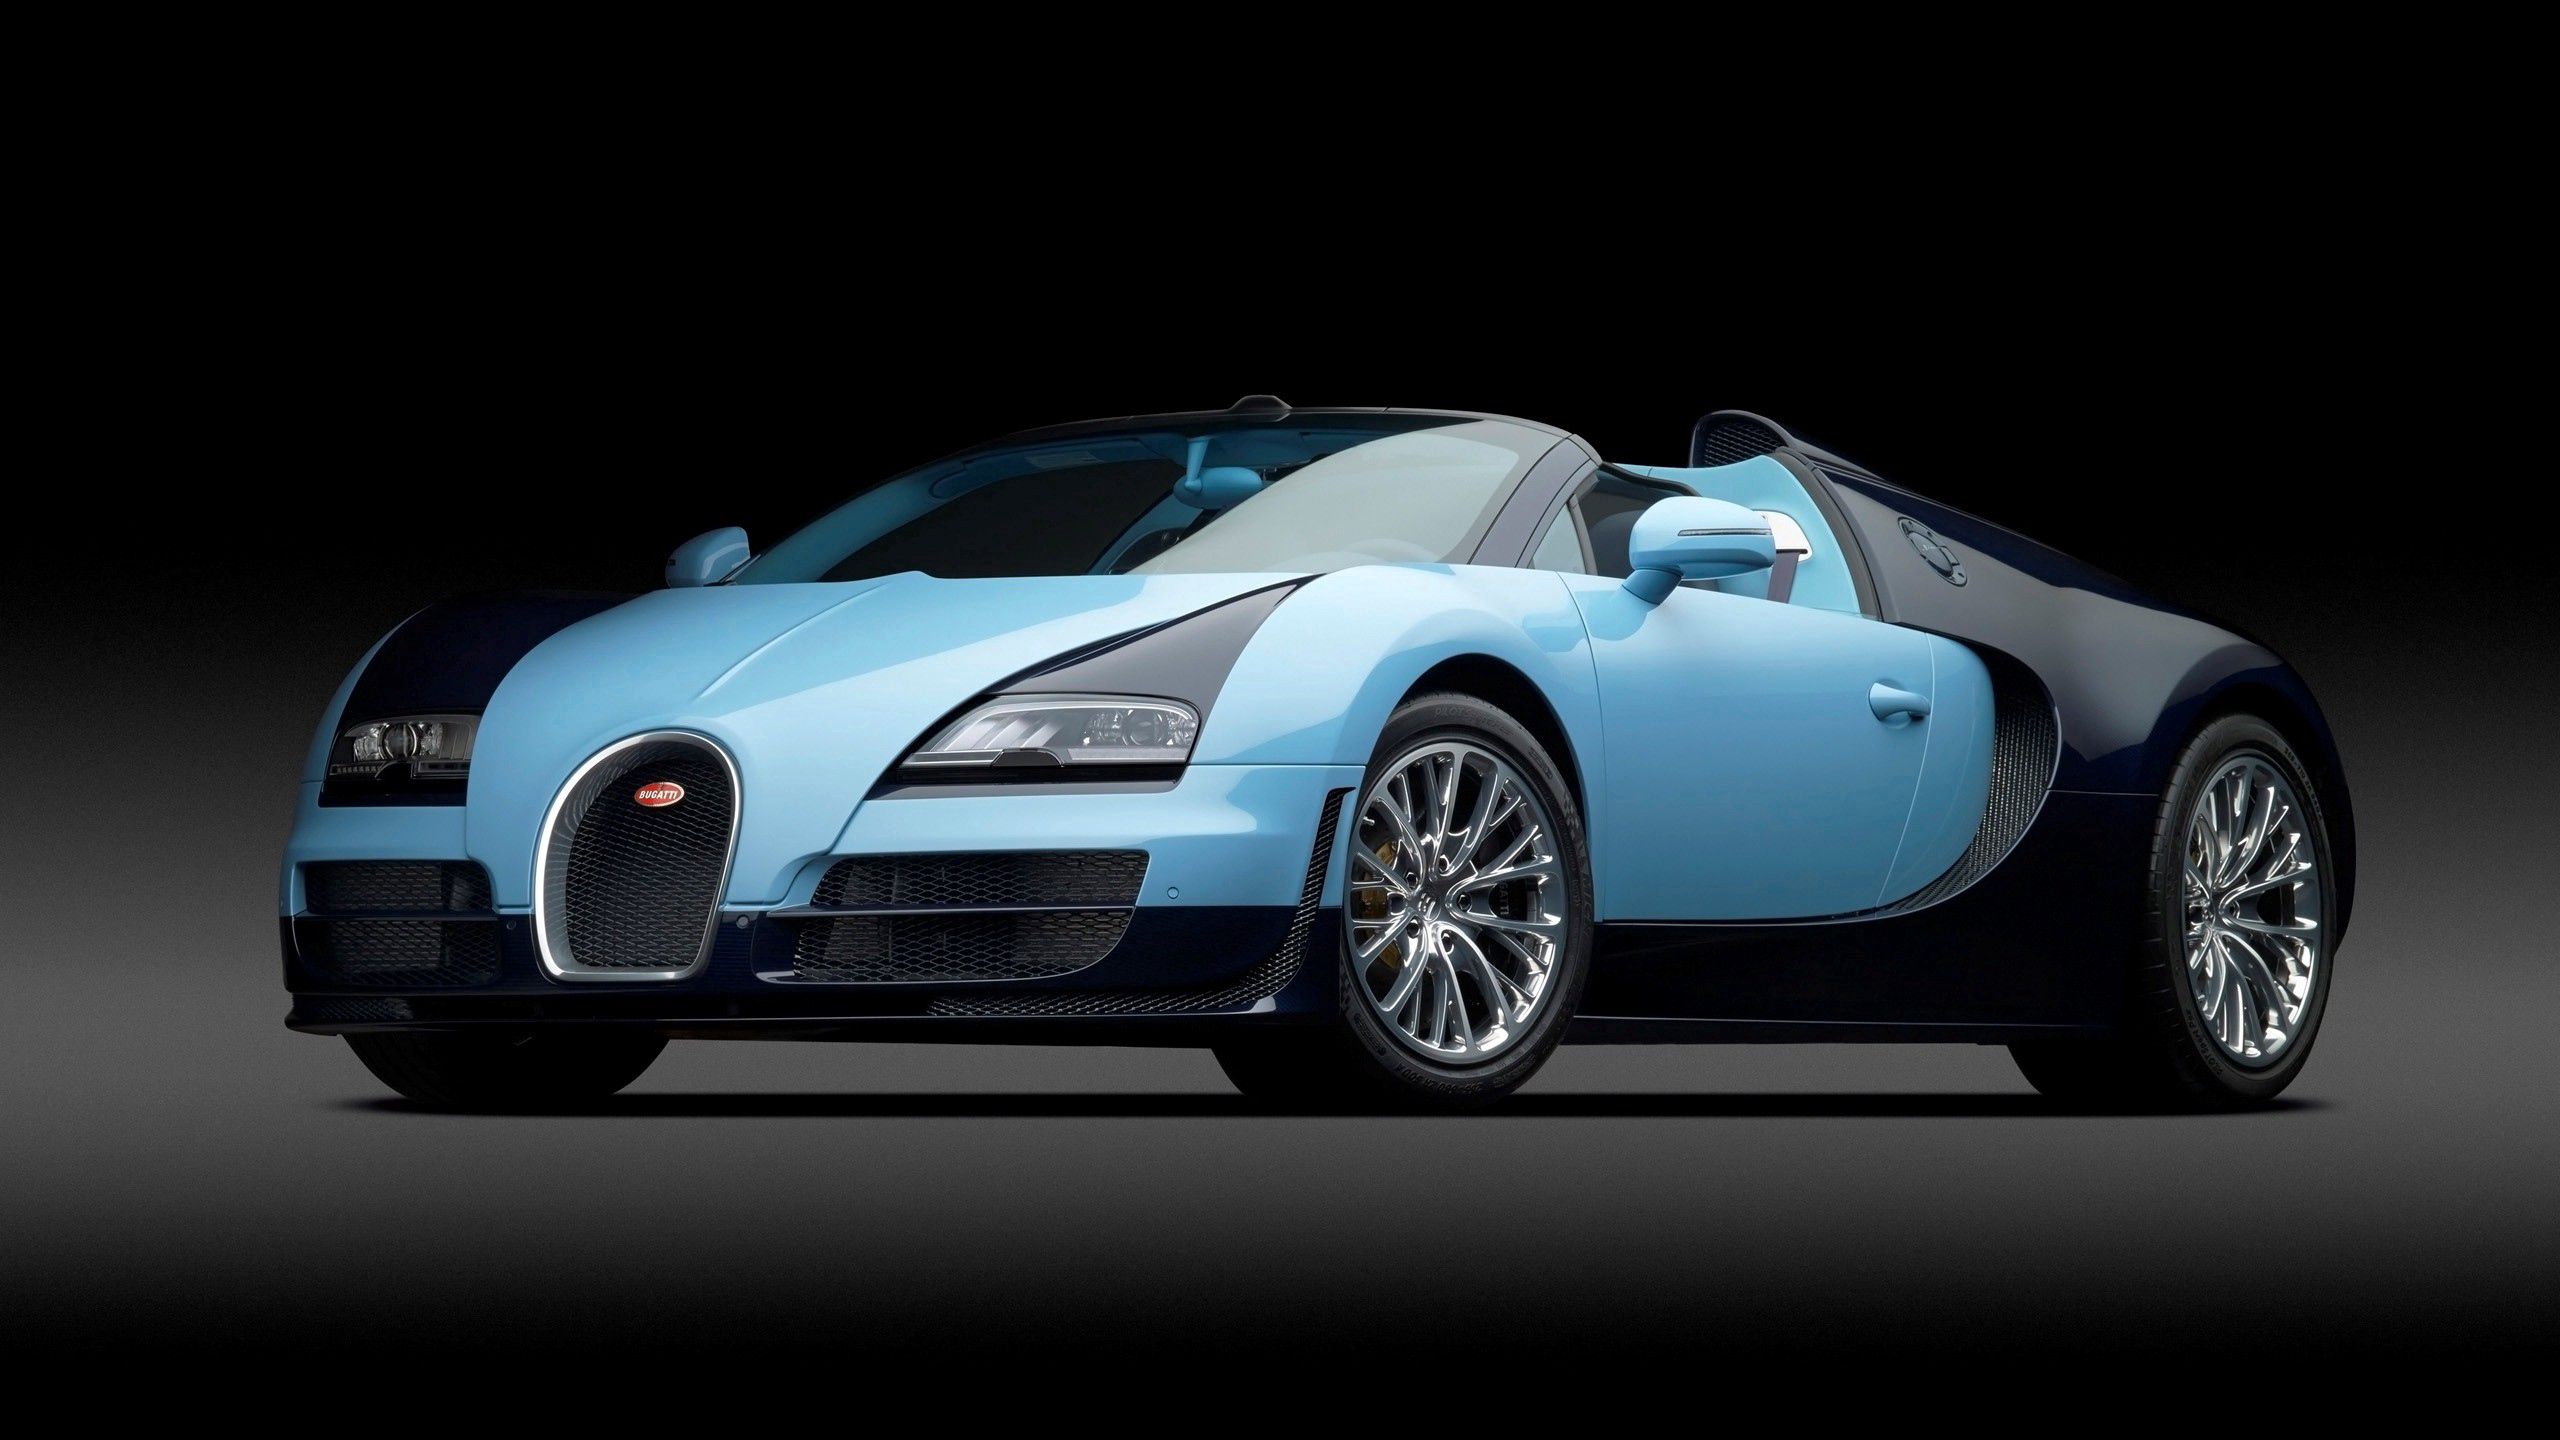 Скачать картинку Veyron Grand Sport Vitesse, Bugatti Veyron Vitesse Jean Pierre Wimille, Bugatti Veyron, Автомобиль, Тачки (Cars) в телефон бесплатно.